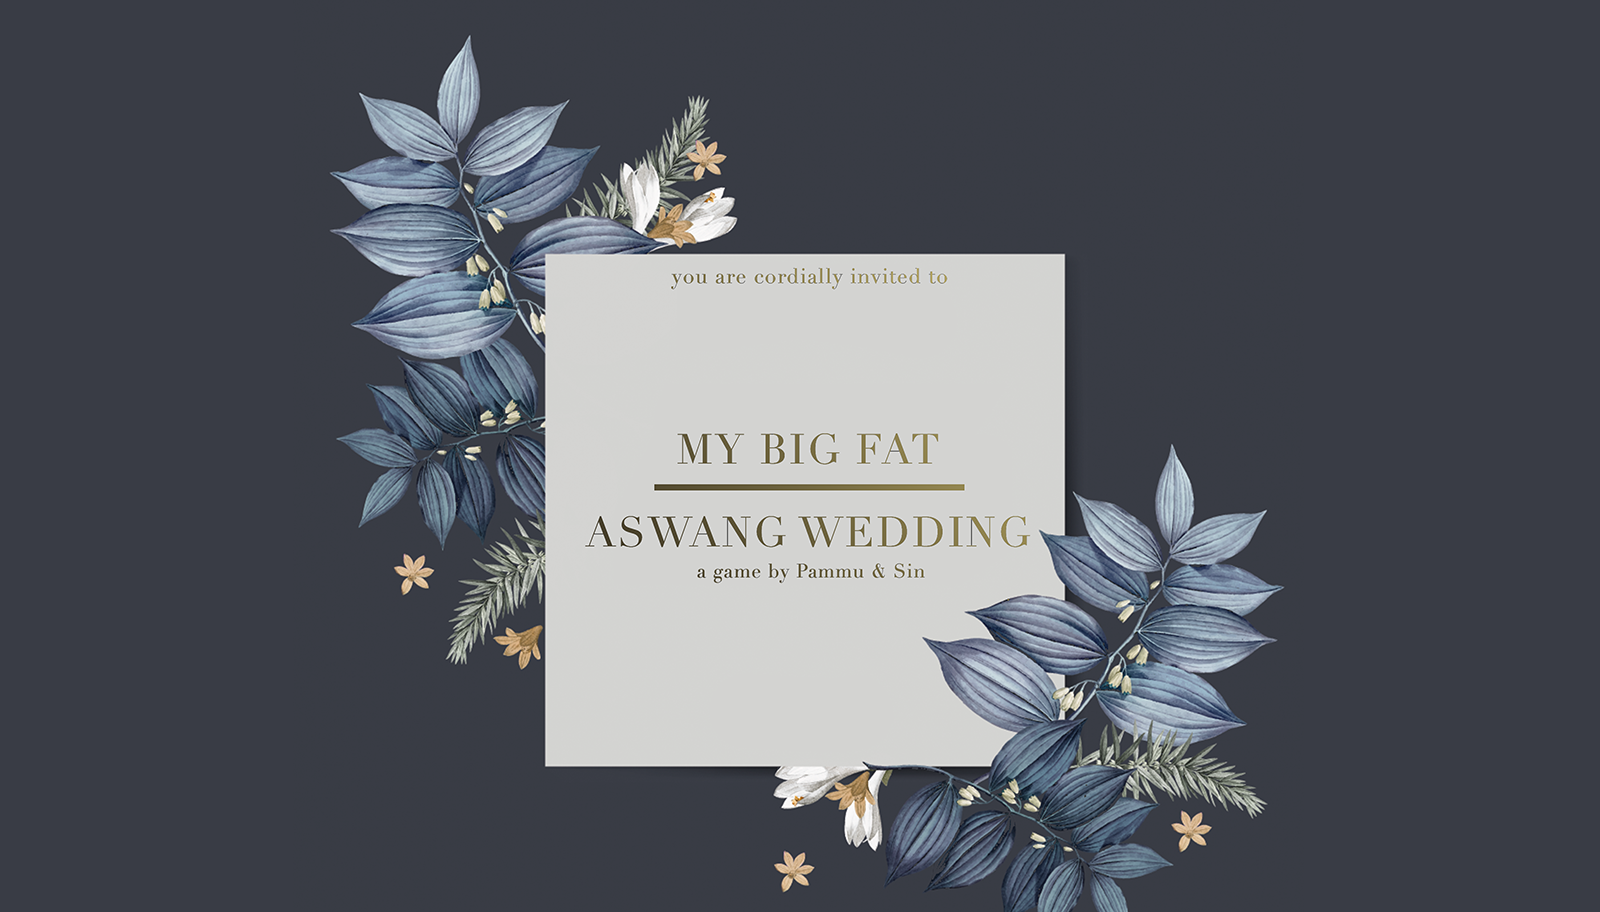 My Big Fat Aswang Wedding